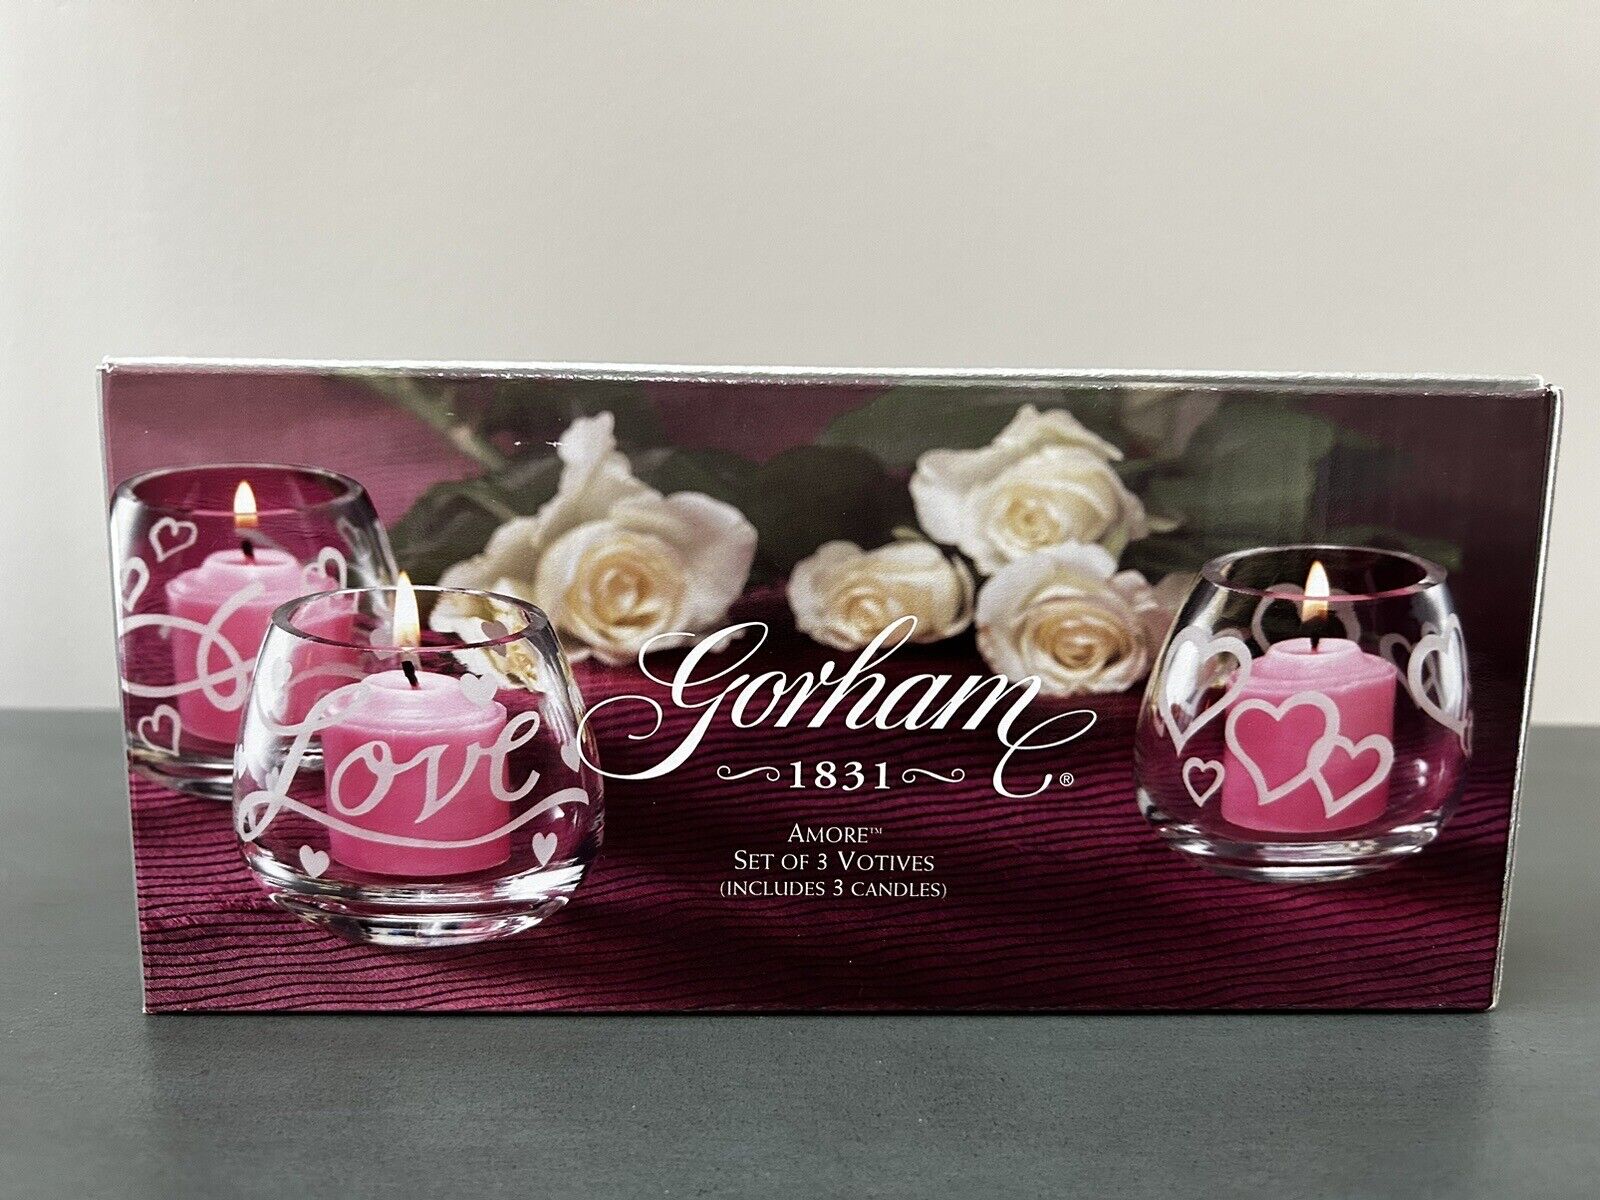 GORHAM 1831 VALENTINE Amore VOTIVES Love Hearts Set of 3, ORIGINAL BOX w/CANDLES